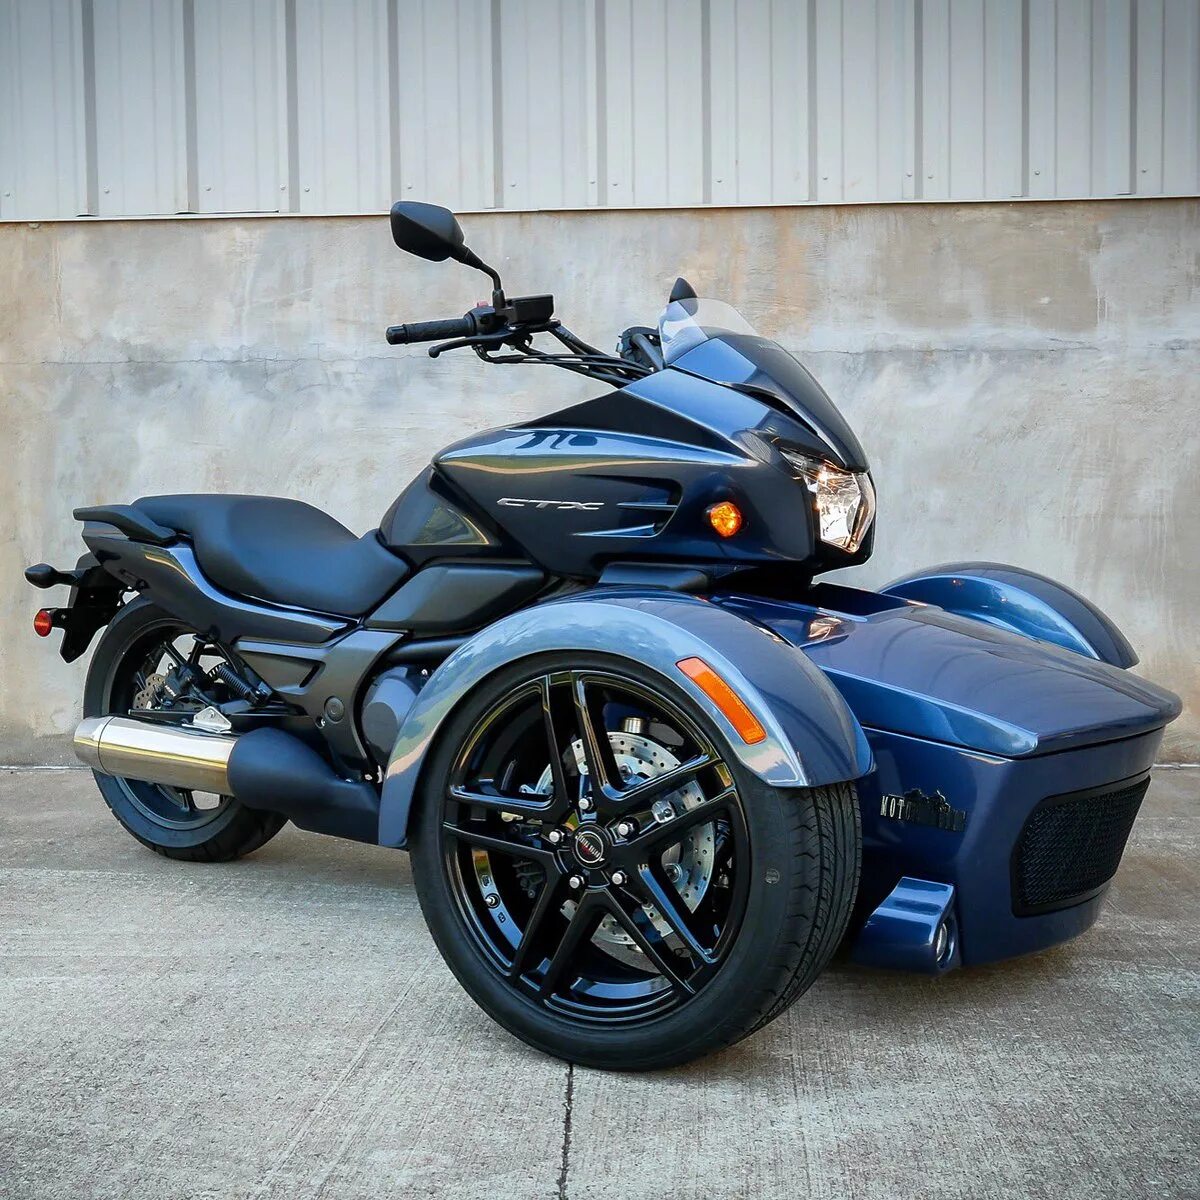 Трайк Форт МС. Трайк Hornet. CF Moto трицикл. Хонда квадрик трайк.